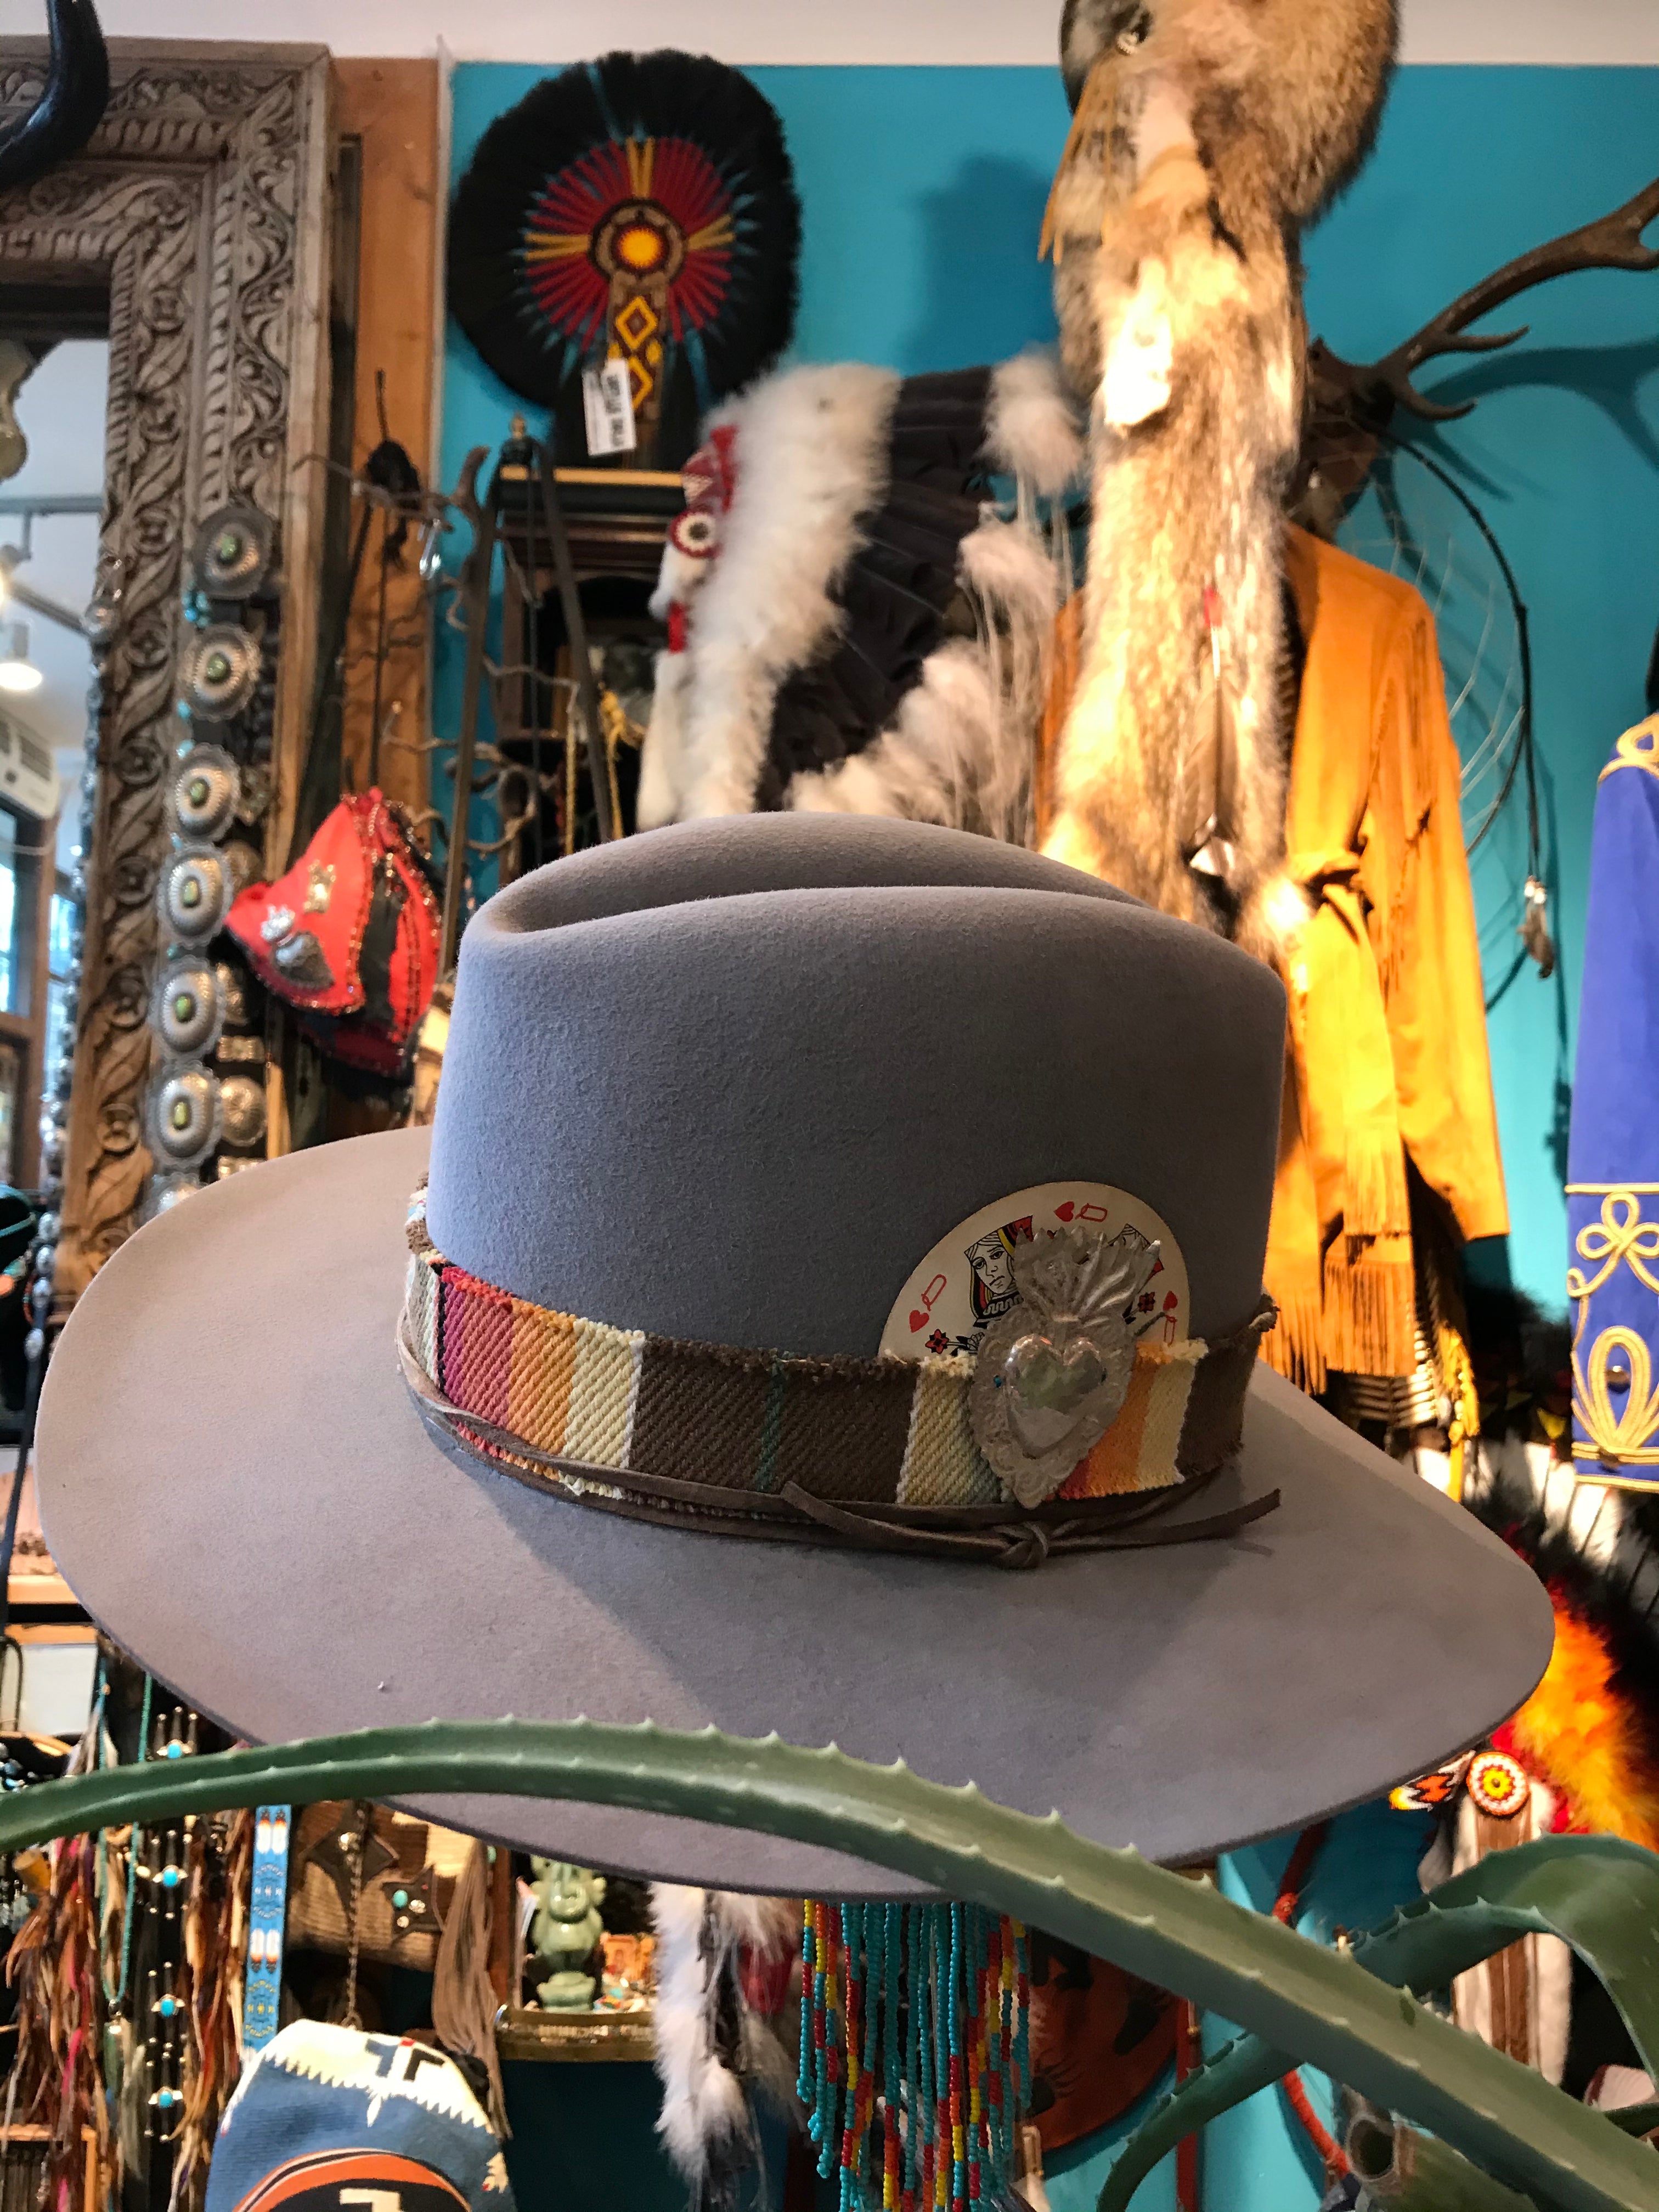 Grey custom made hat